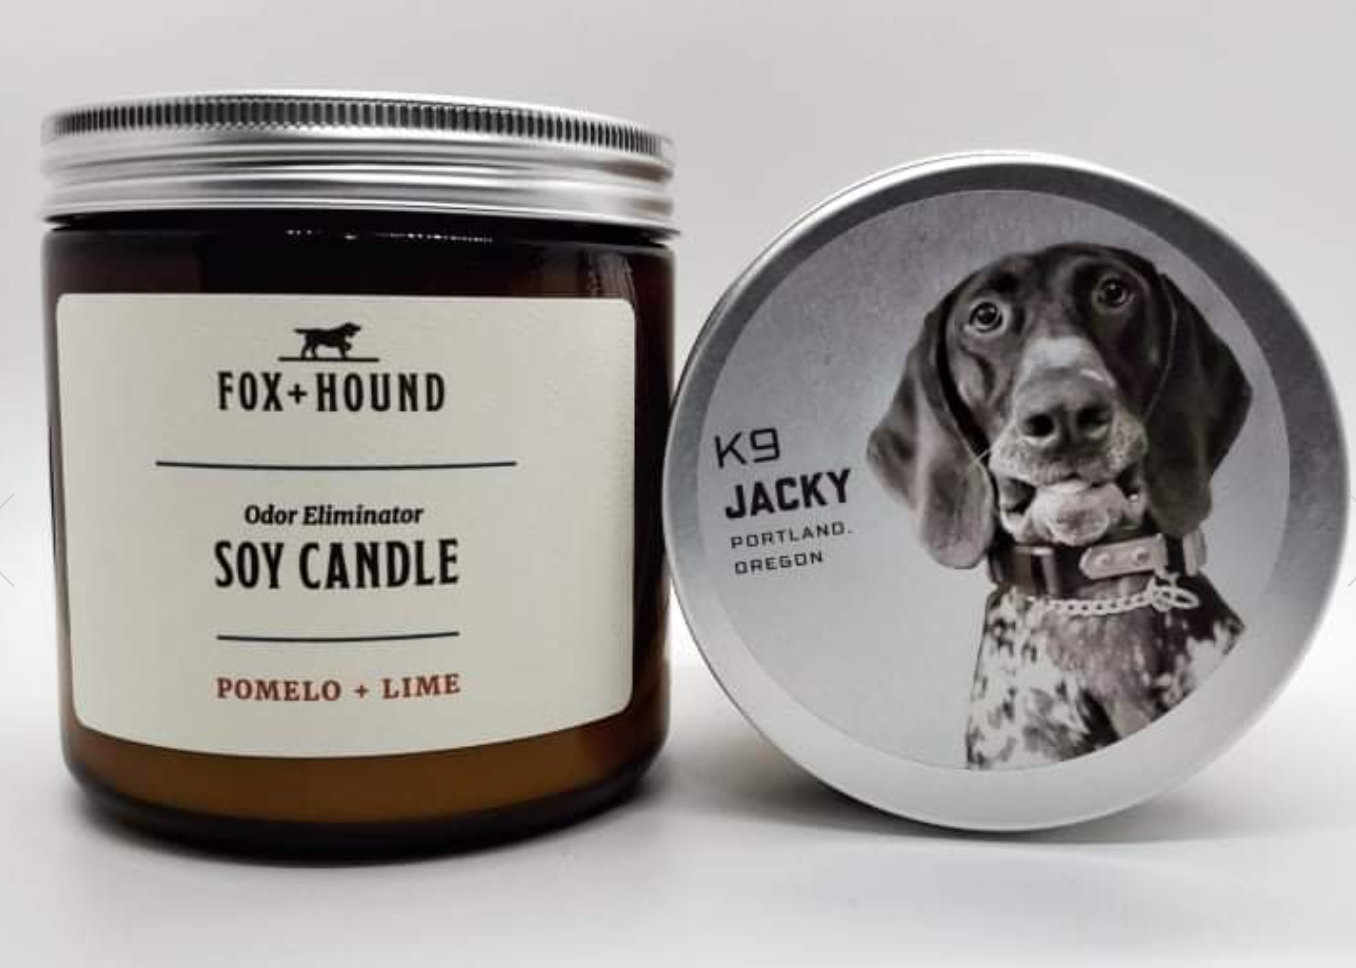 Fox + Hound Odour Eliminator Soy Candle - K9 Jacky Pomelo + Lime Scent